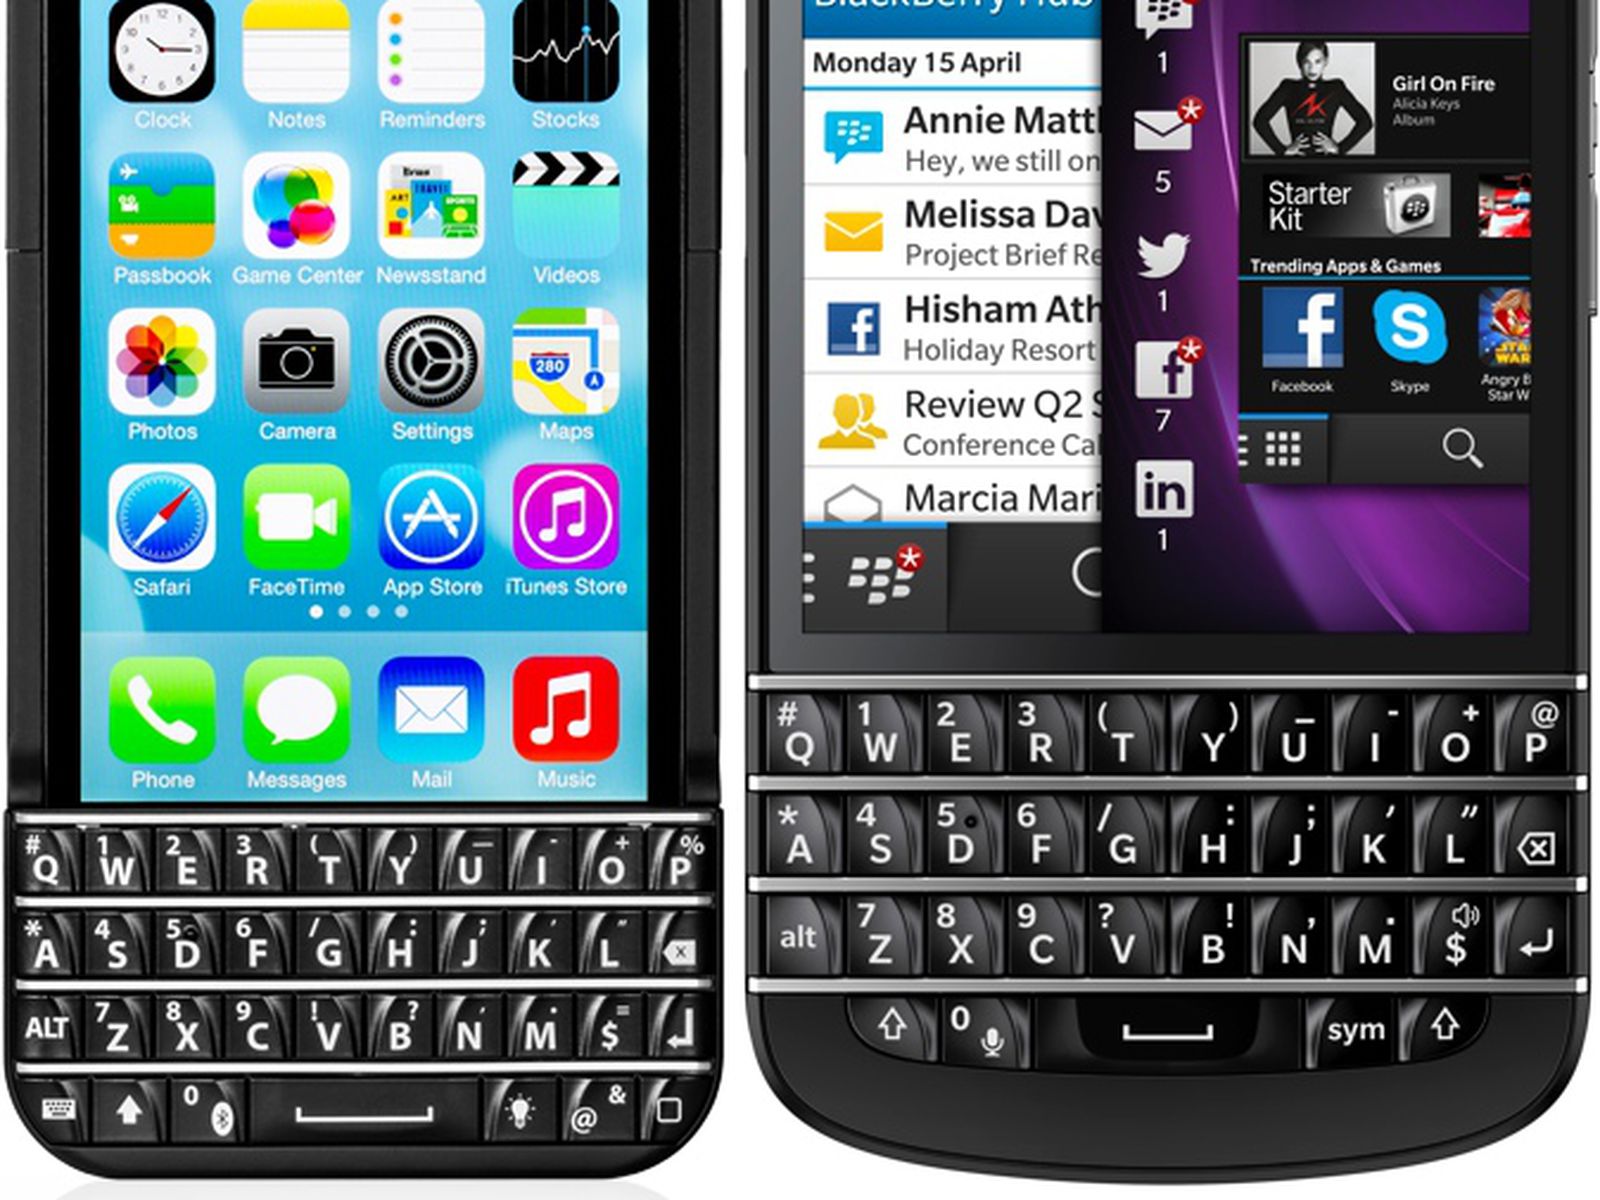 iPhone Maker 'Typo' Ordered to Pay BlackBerry $860,000 - MacRumors